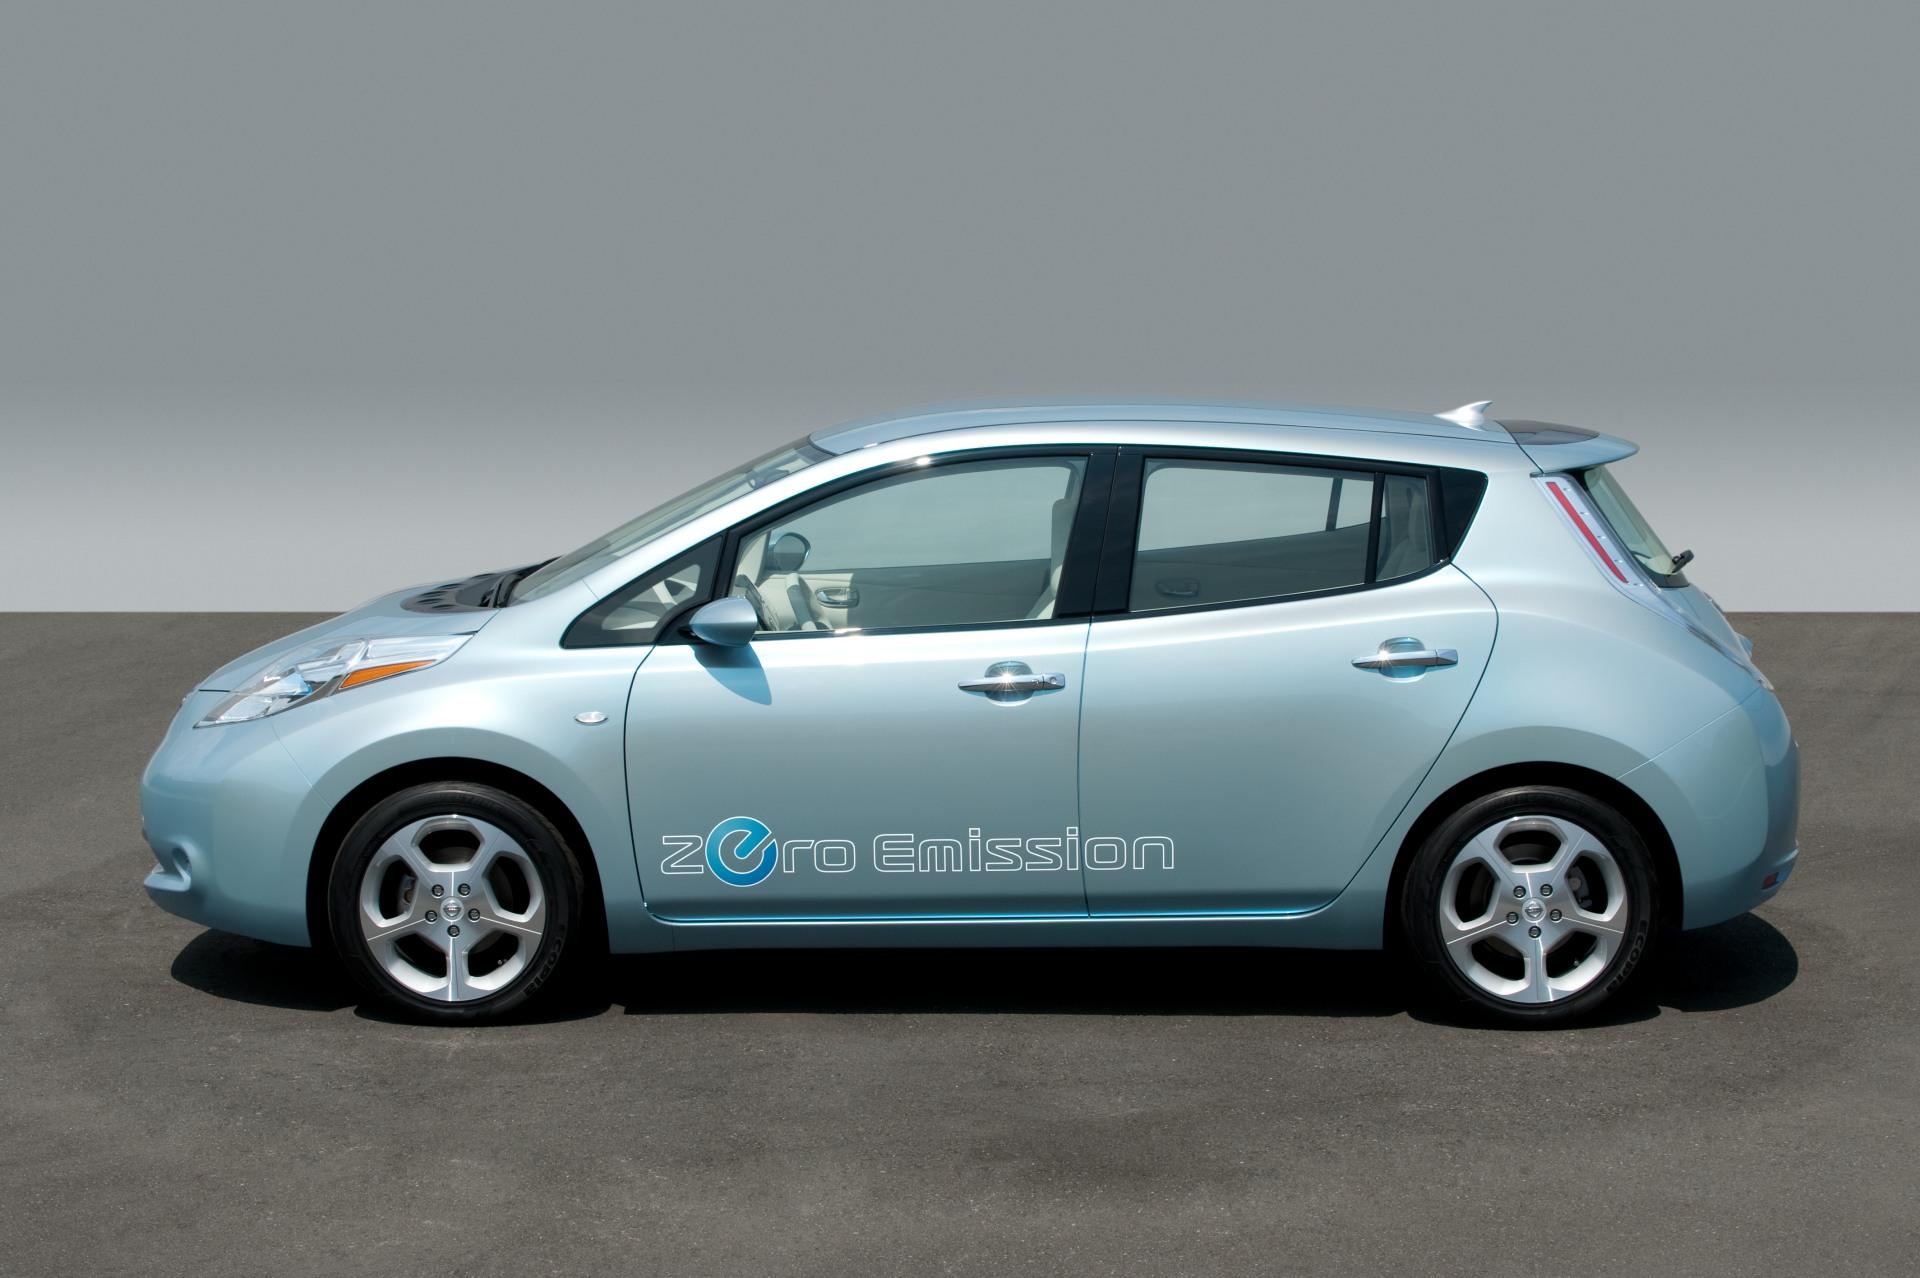 2010 Nissan Leaf EV